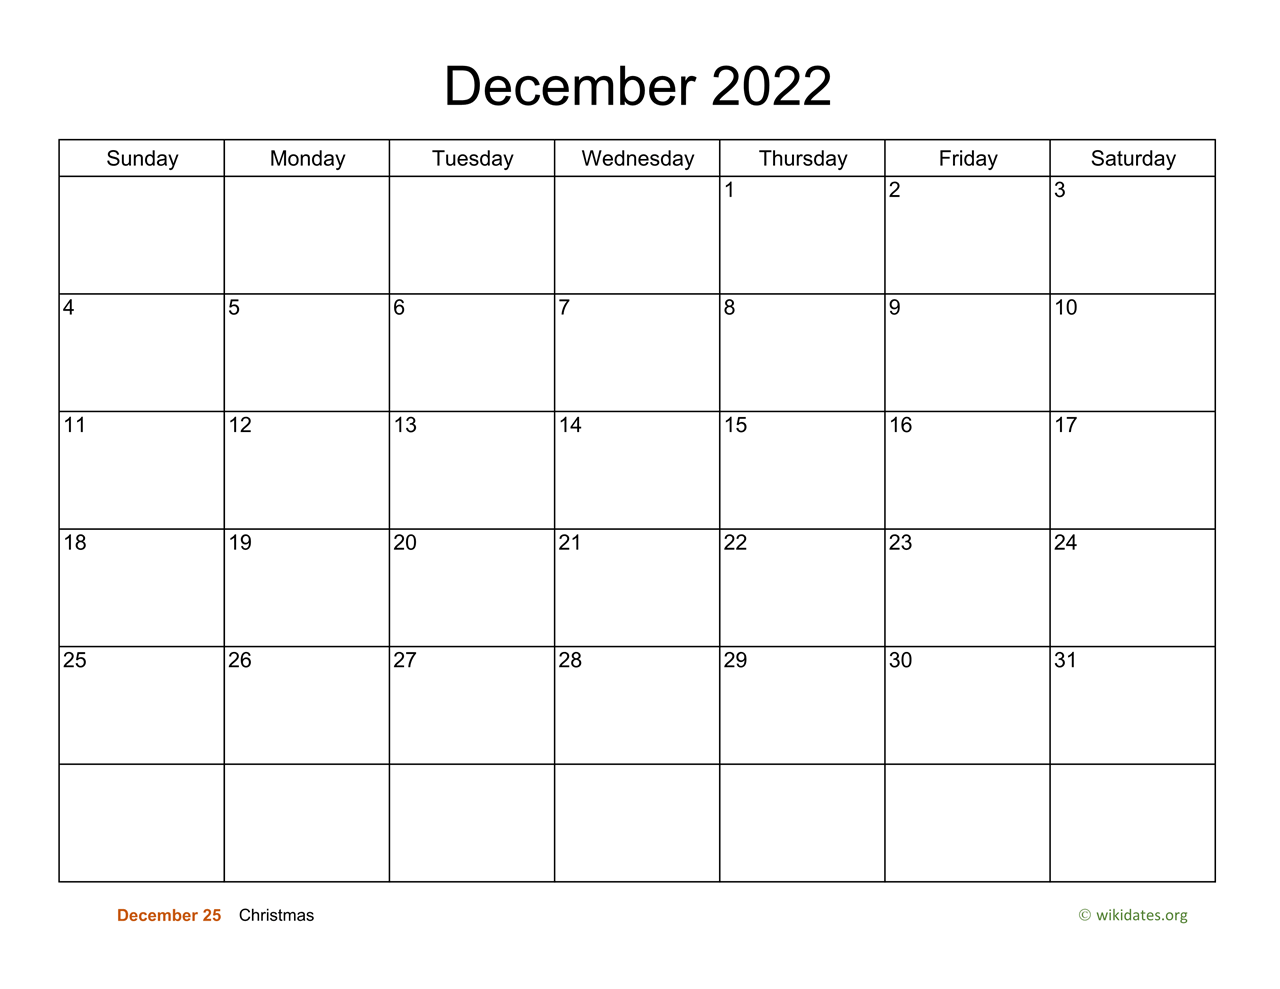 December Monthly Calendar 2022 Basic Calendar For December 2022 | Wikidates.org